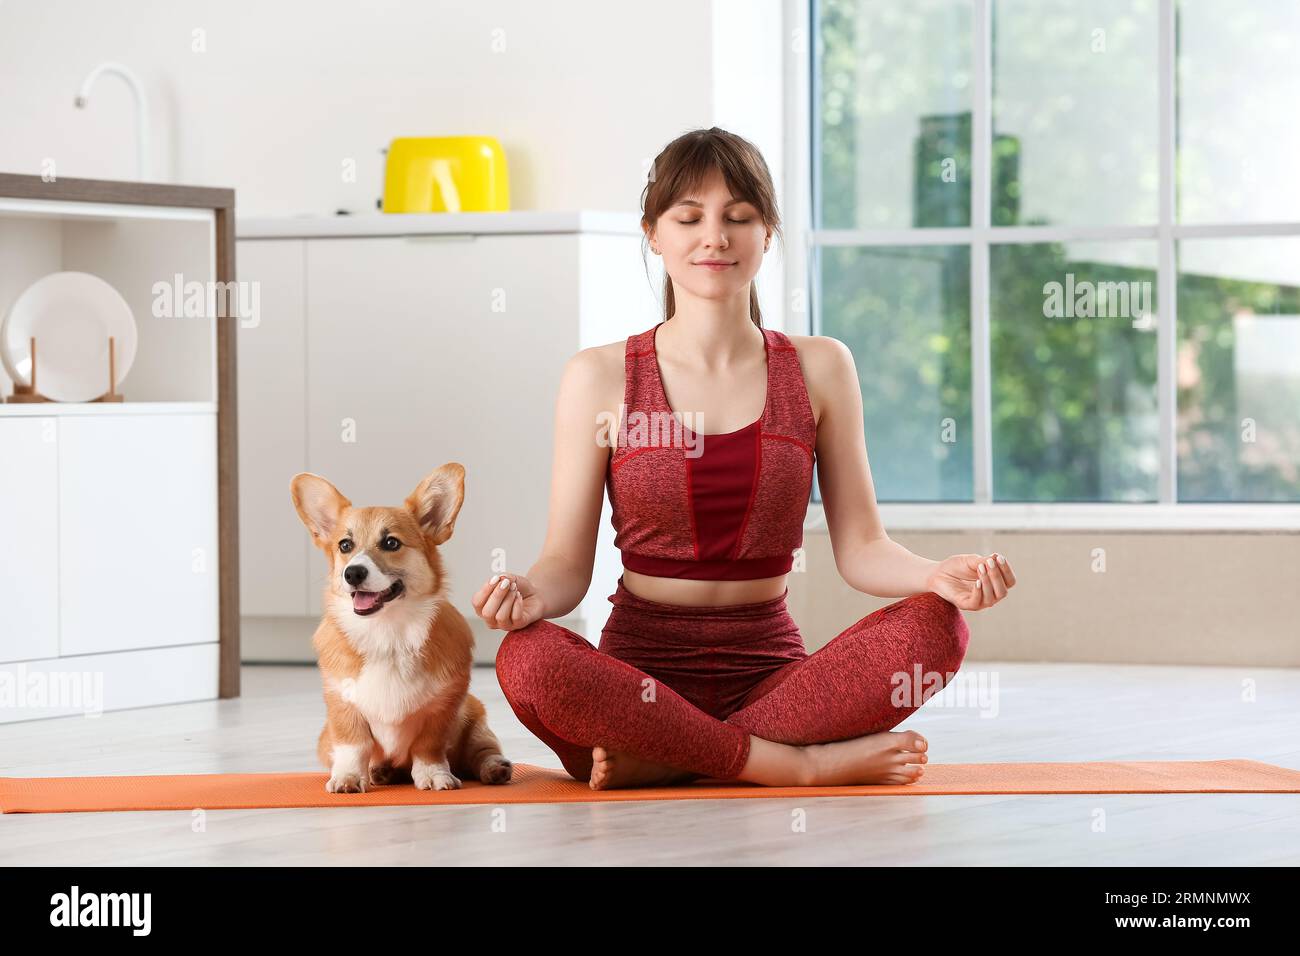 https://c8.alamy.com/comp/2RMNMWX/sporty-young-woman-meditating-with-cute-corgi-dog-on-yoga-mat-in-kitchen-2RMNMWX.jpg